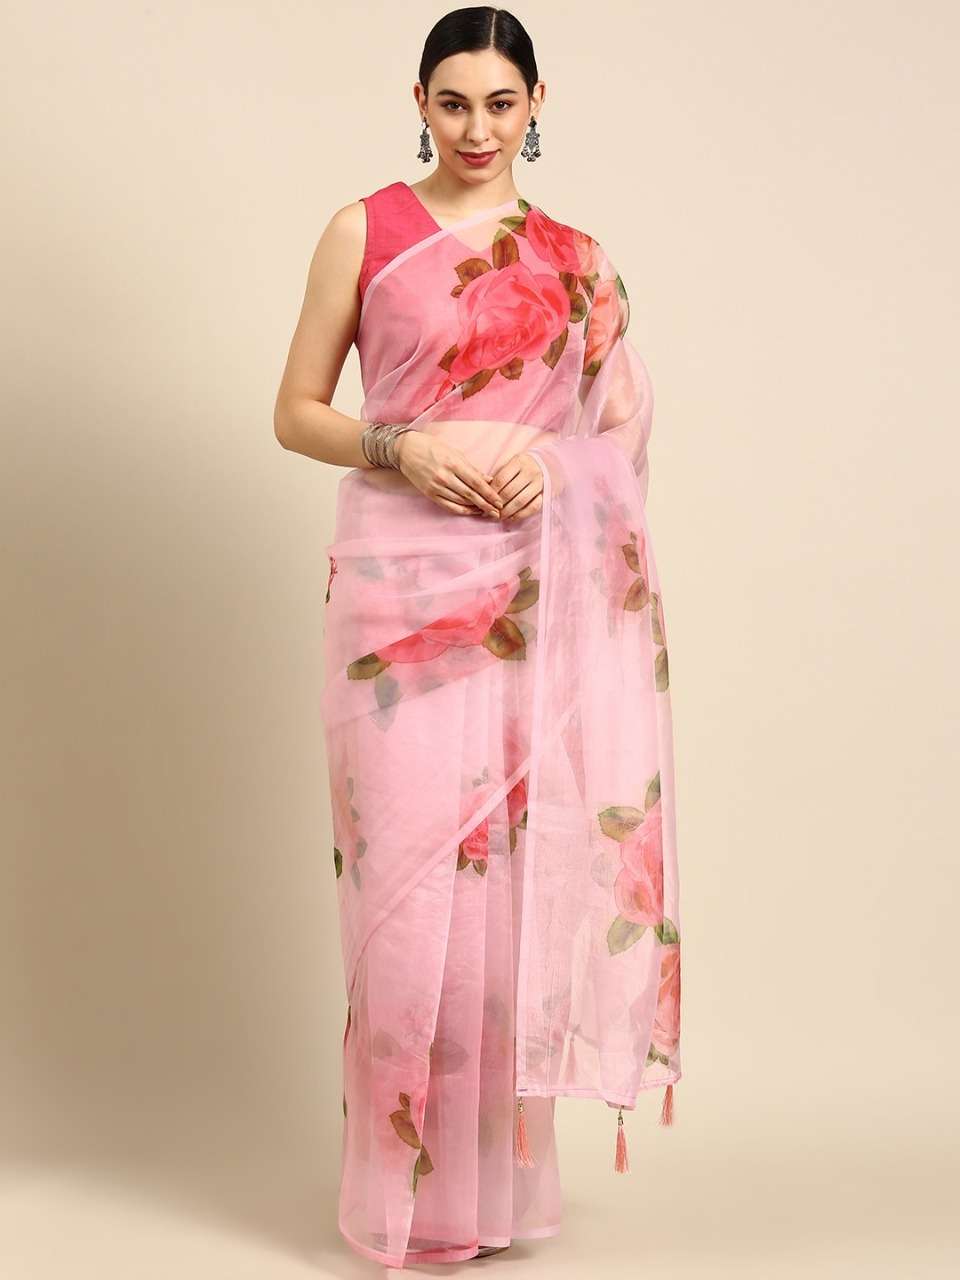 Mahotsav moh manthan nivaa Fancy with digital flower print saree collection